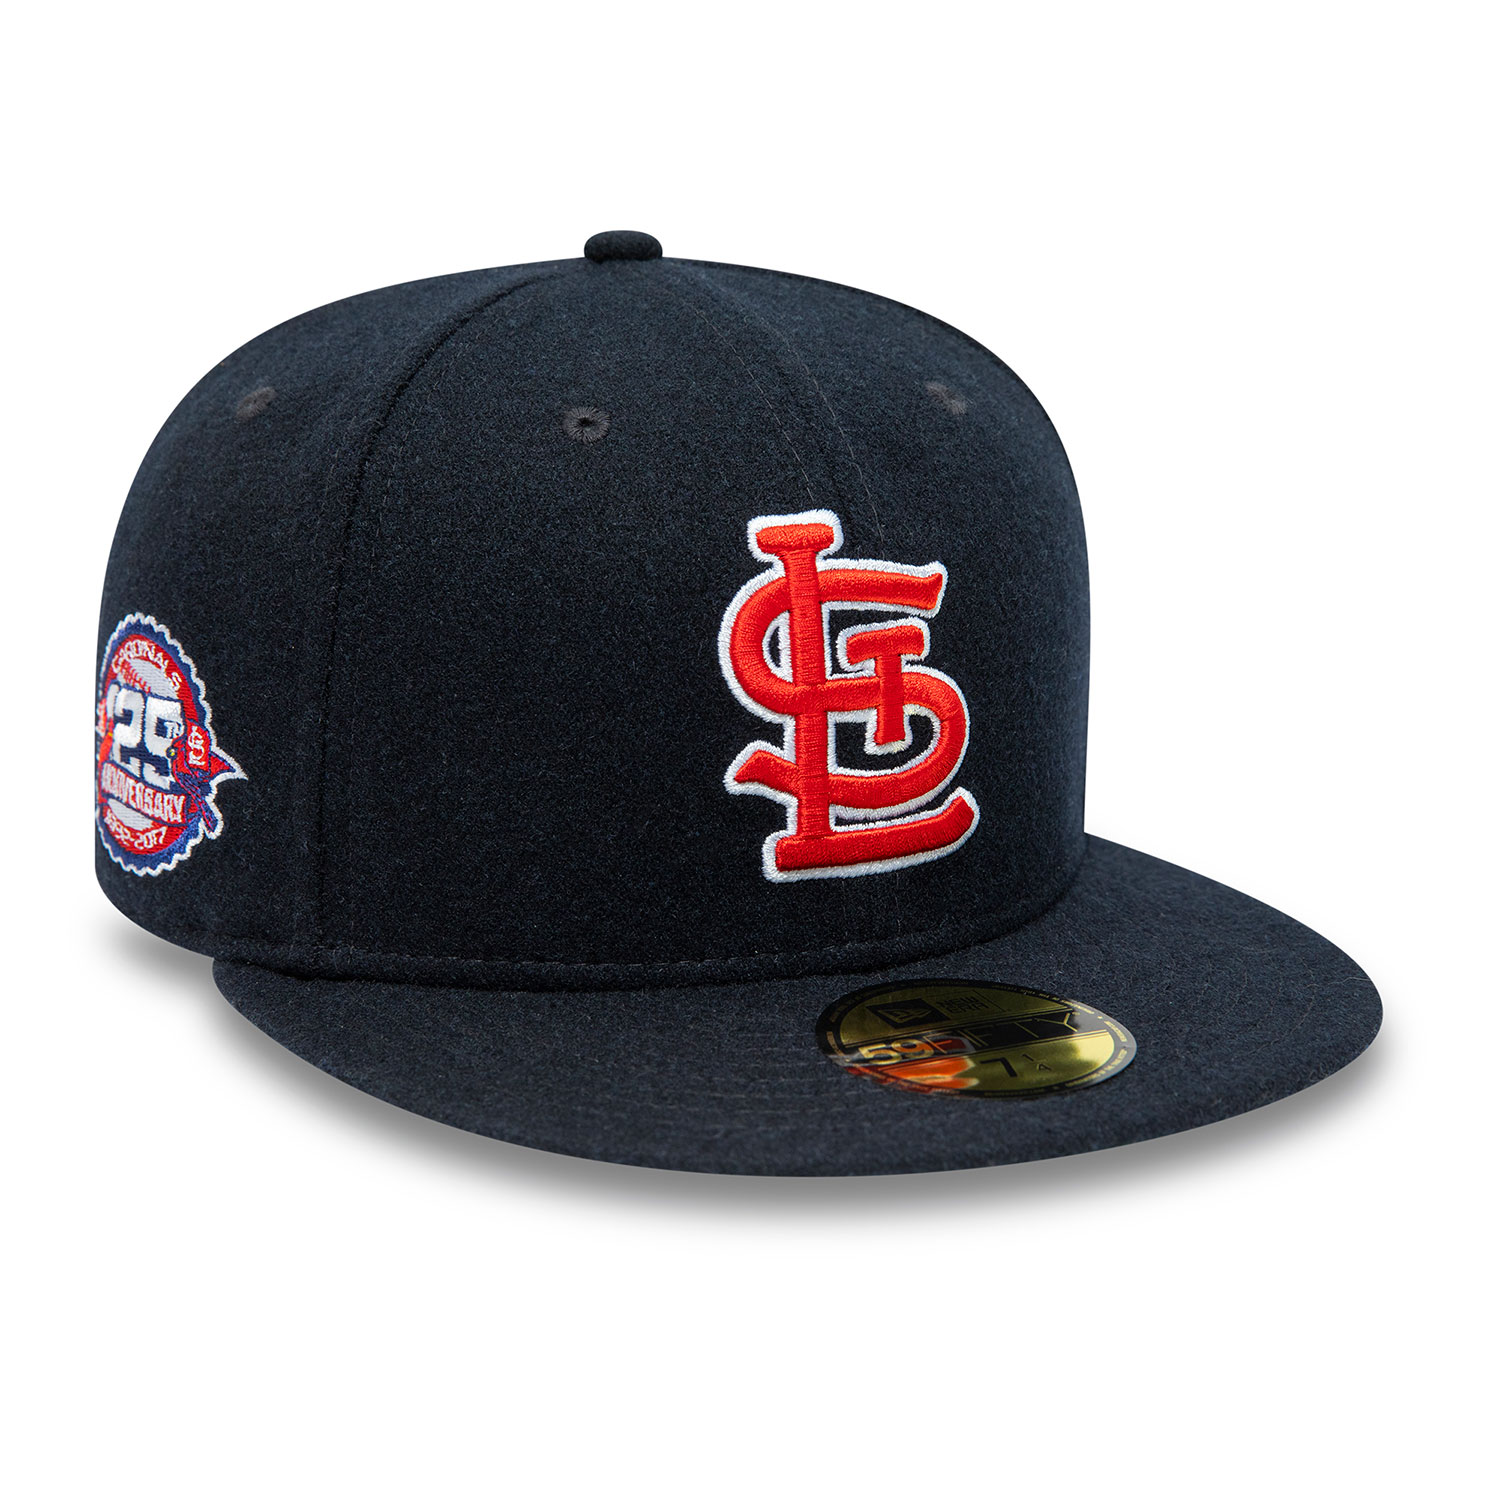 Official New Era MLB 125th Anniversary St. Louis Cardinals Wool